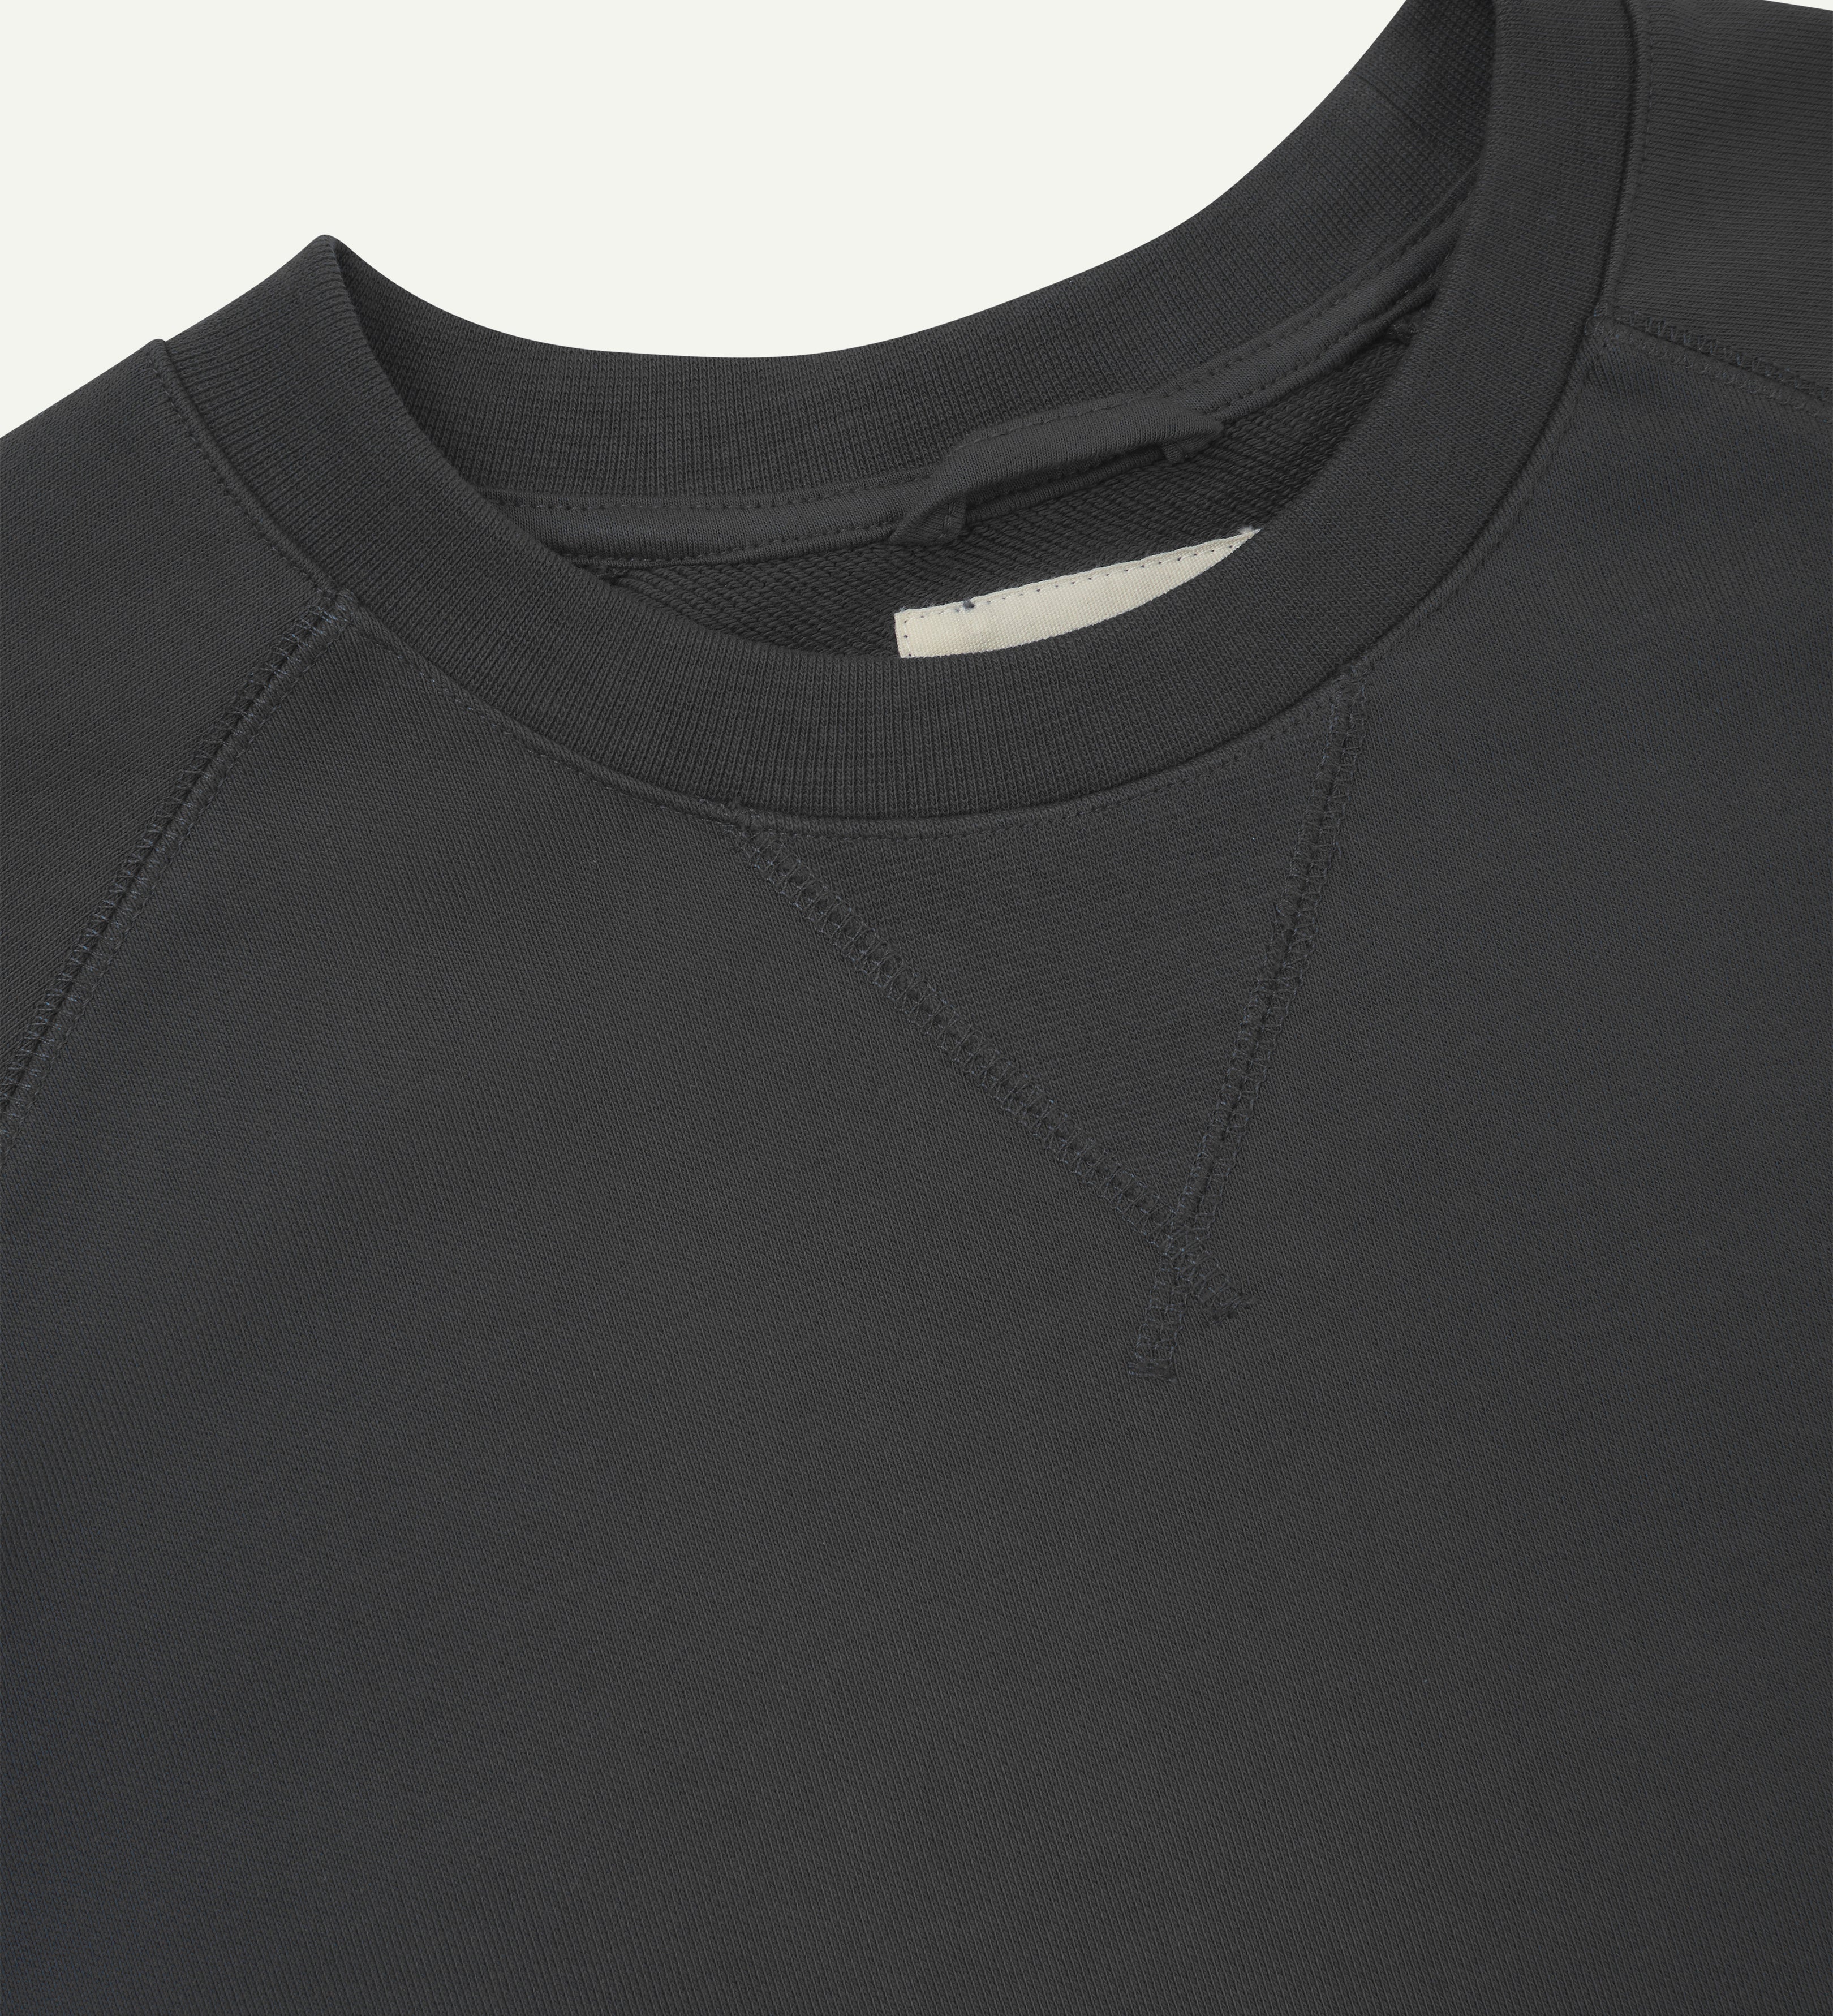 Close-up view of collar - dark grey organic heavyweight cotton #7005 jersey sweatshirt by Uskees